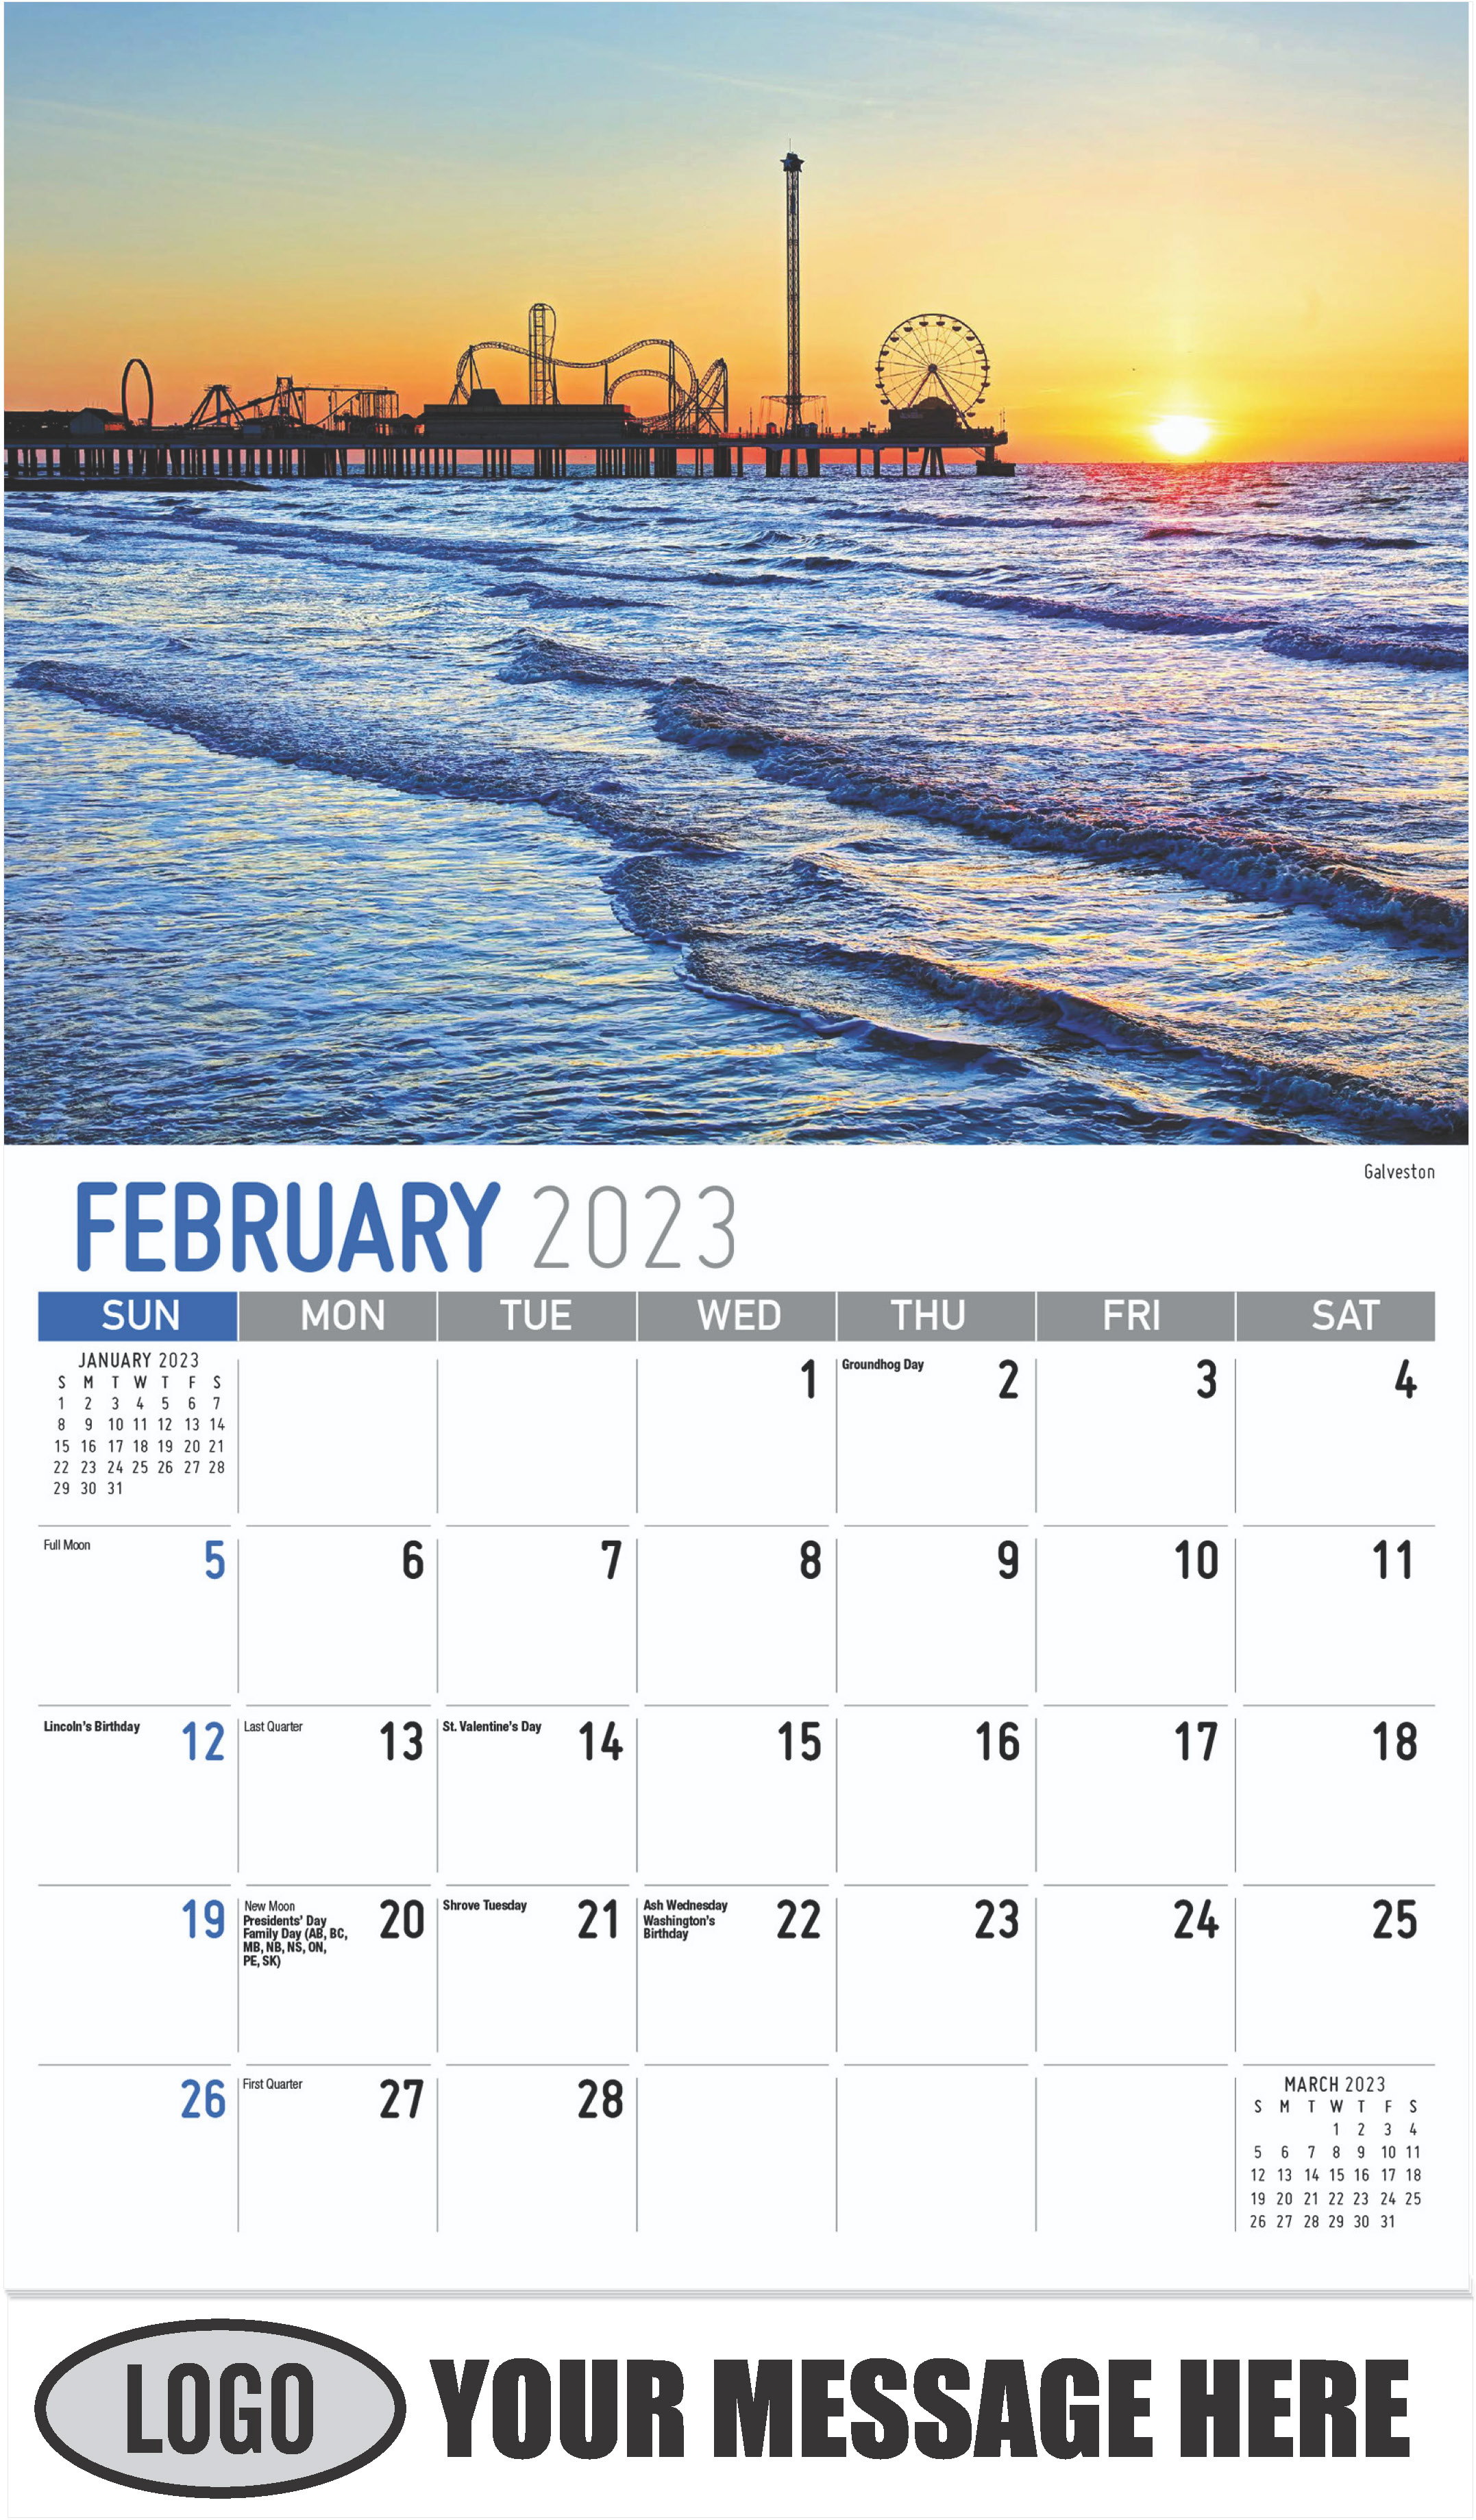 Galveston - February - Scenes of Texas 2023 Promotional Calendar